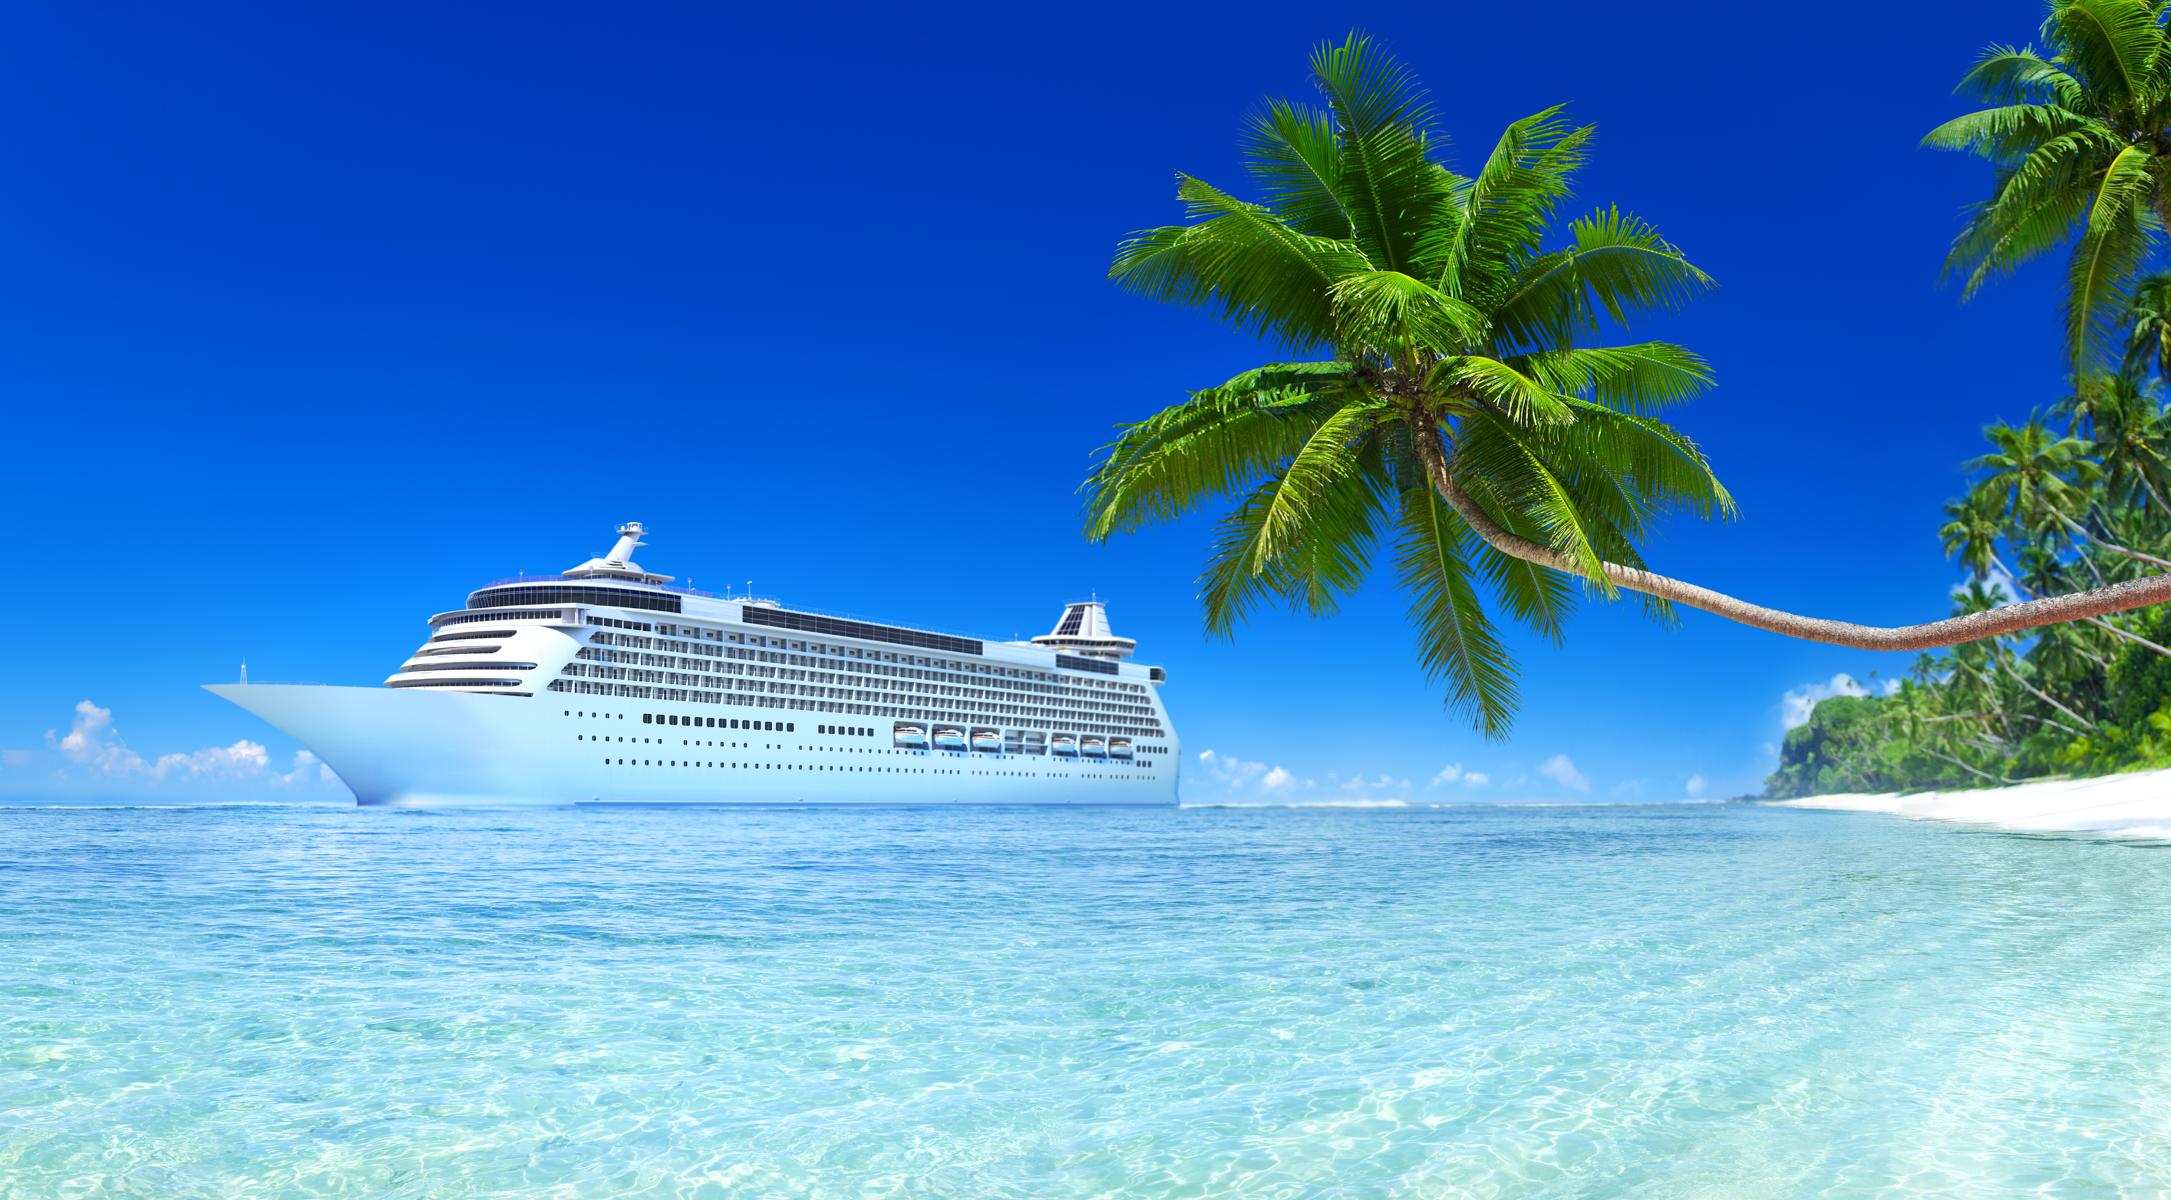 cruise ship in the tropical ocean